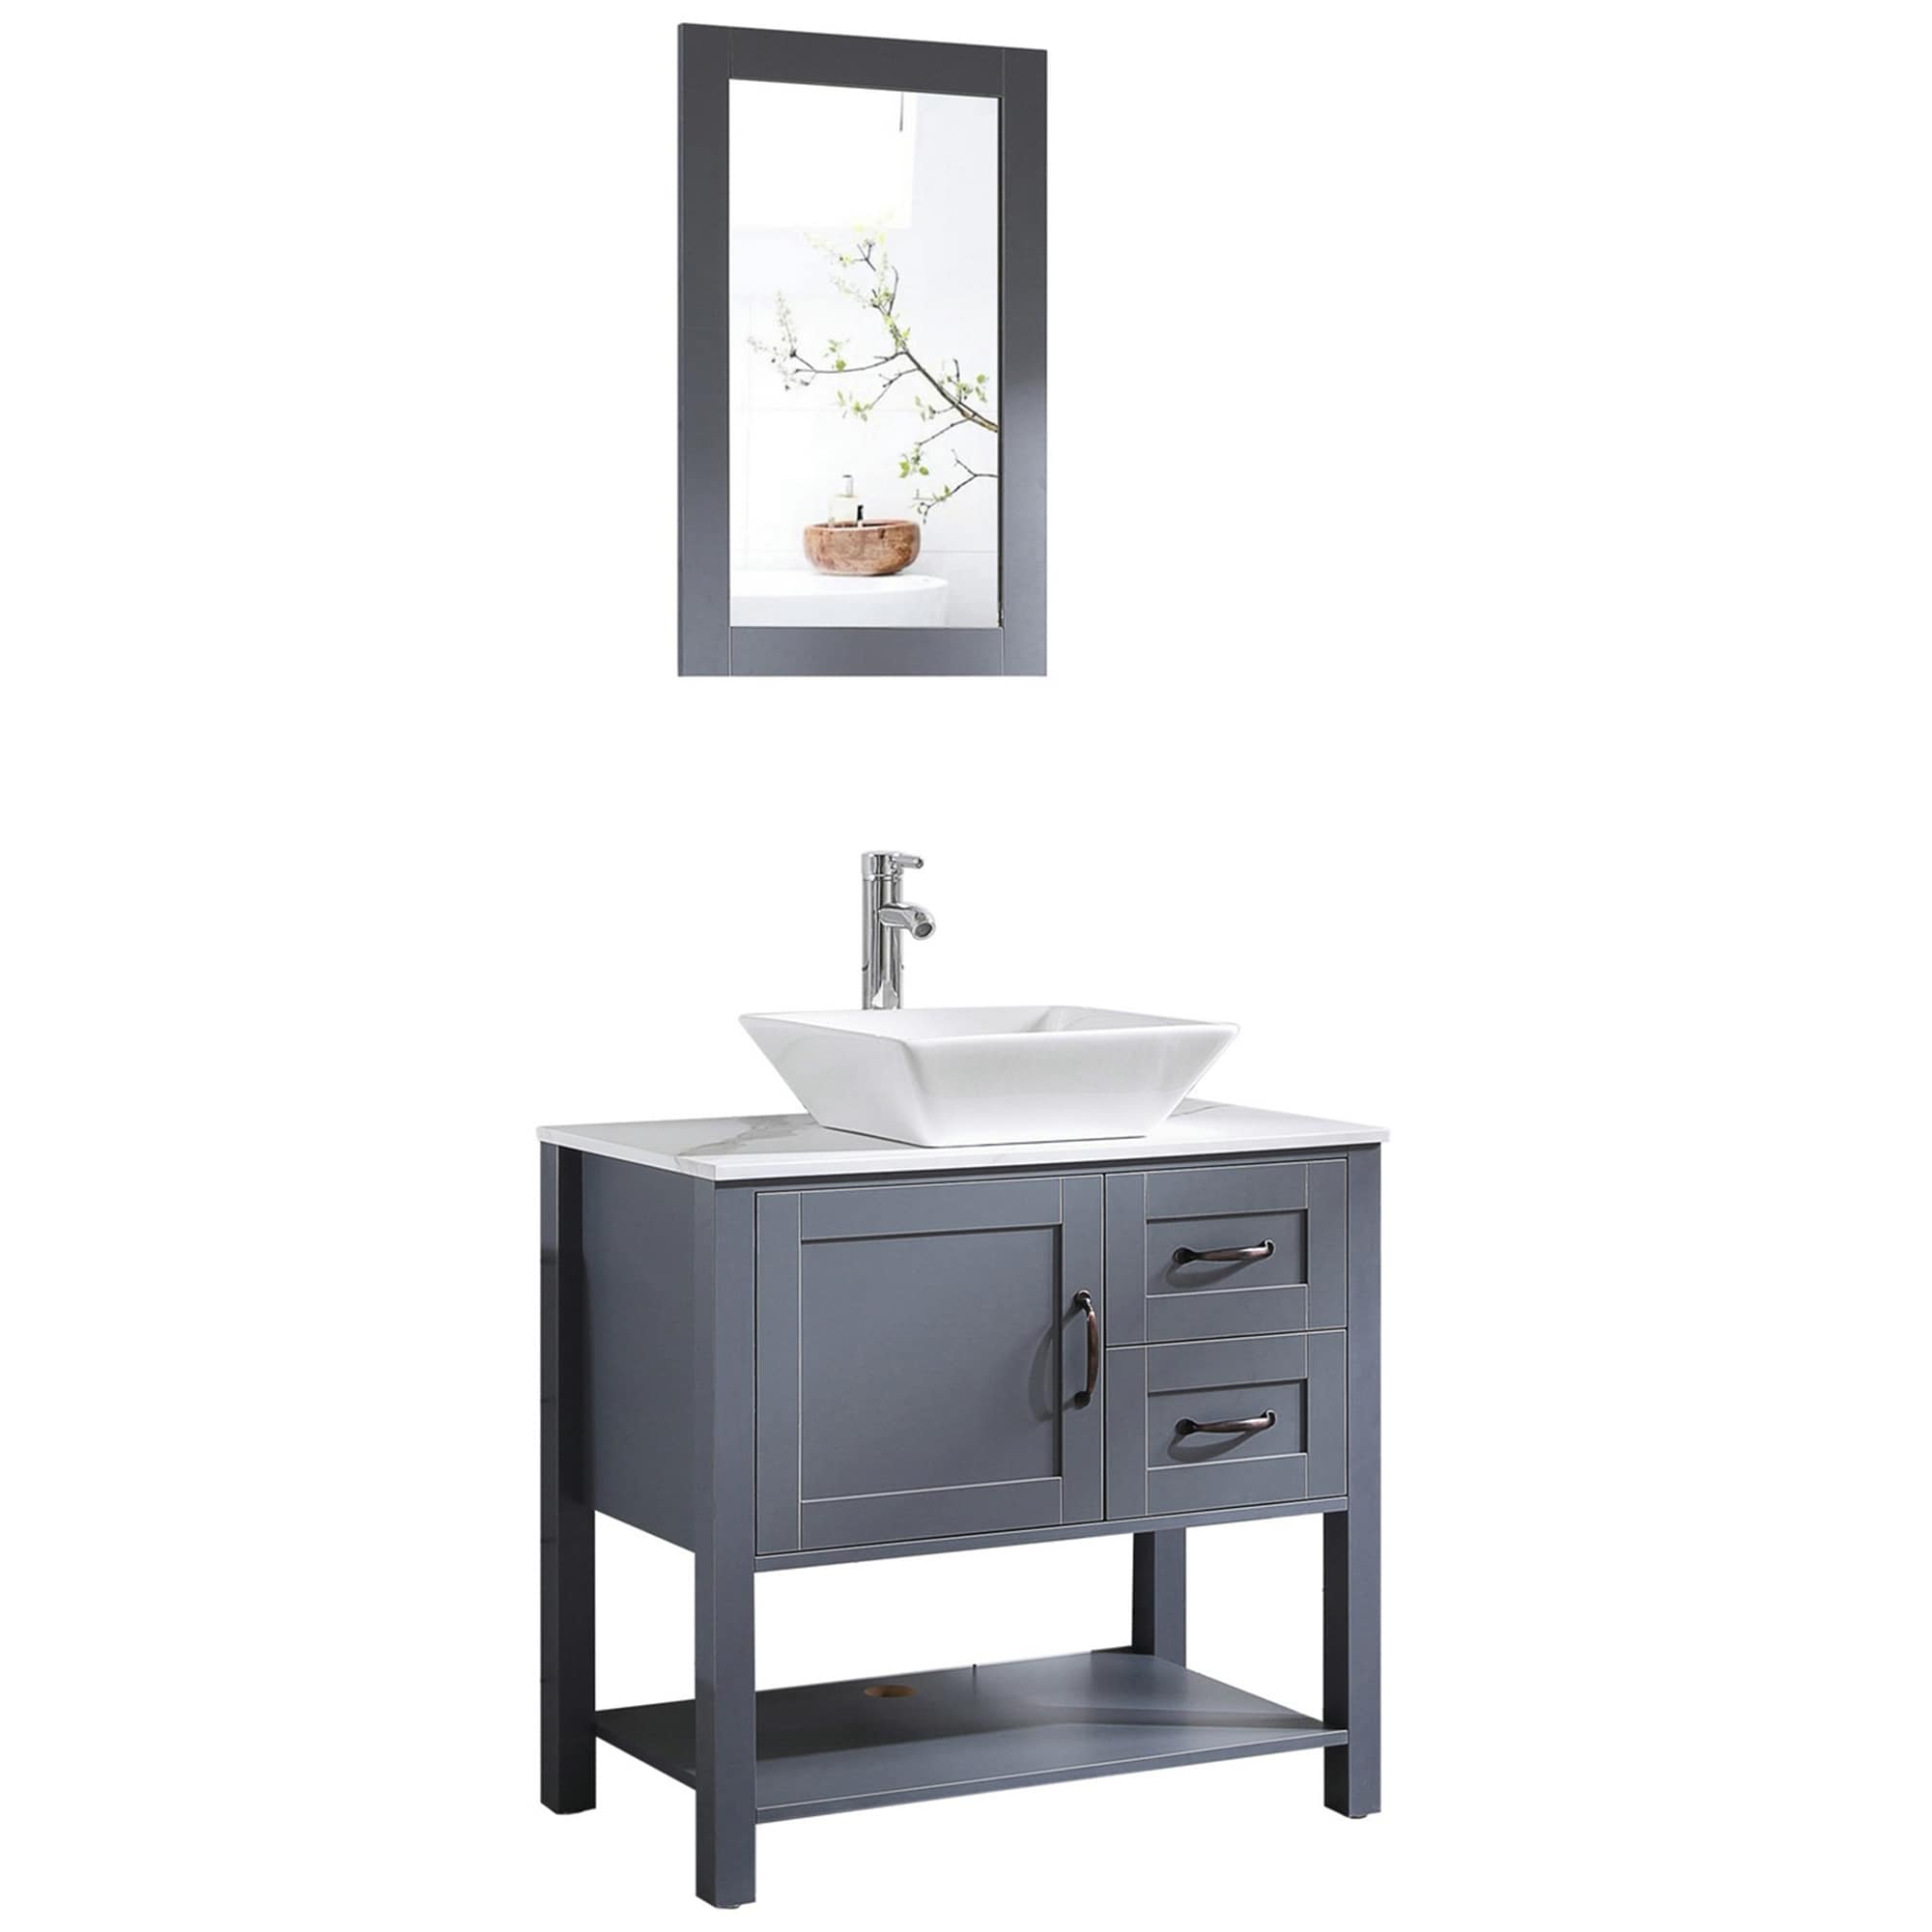 WELLFOR GY Freestanding Bathroom Vanity 30-in Gray Bathroom Vanity with ...